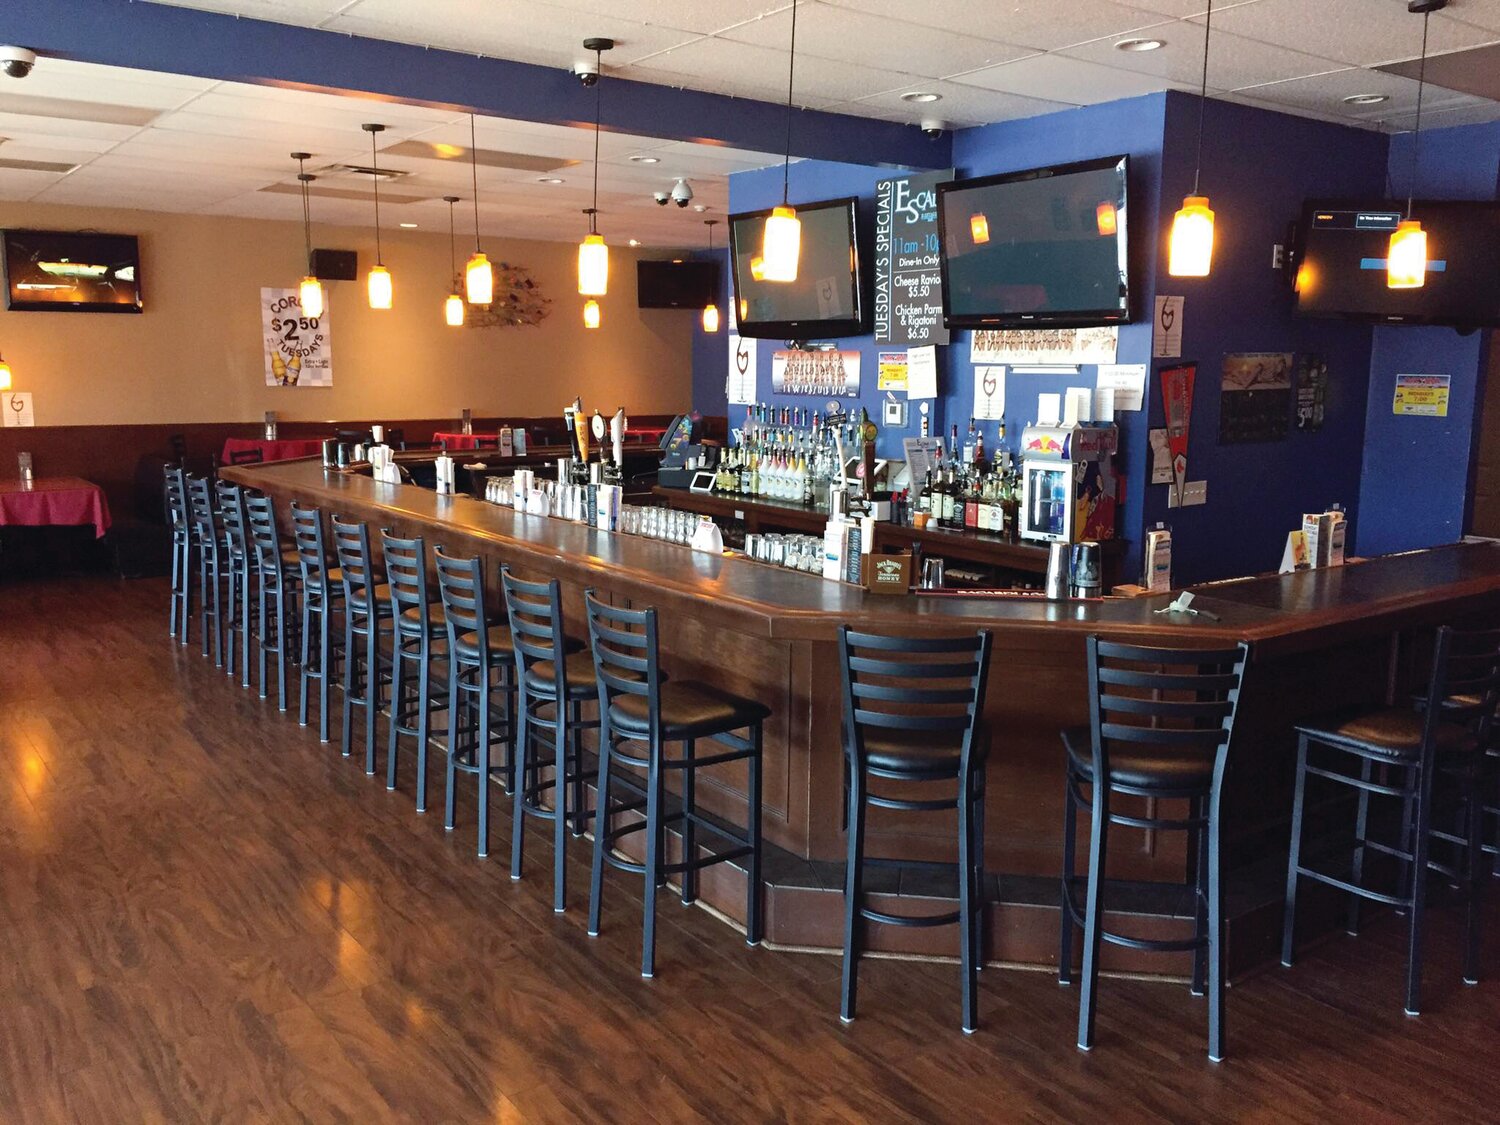 Escada Restaurant & Bar is located at 39 Putnam Pike in Johnston.